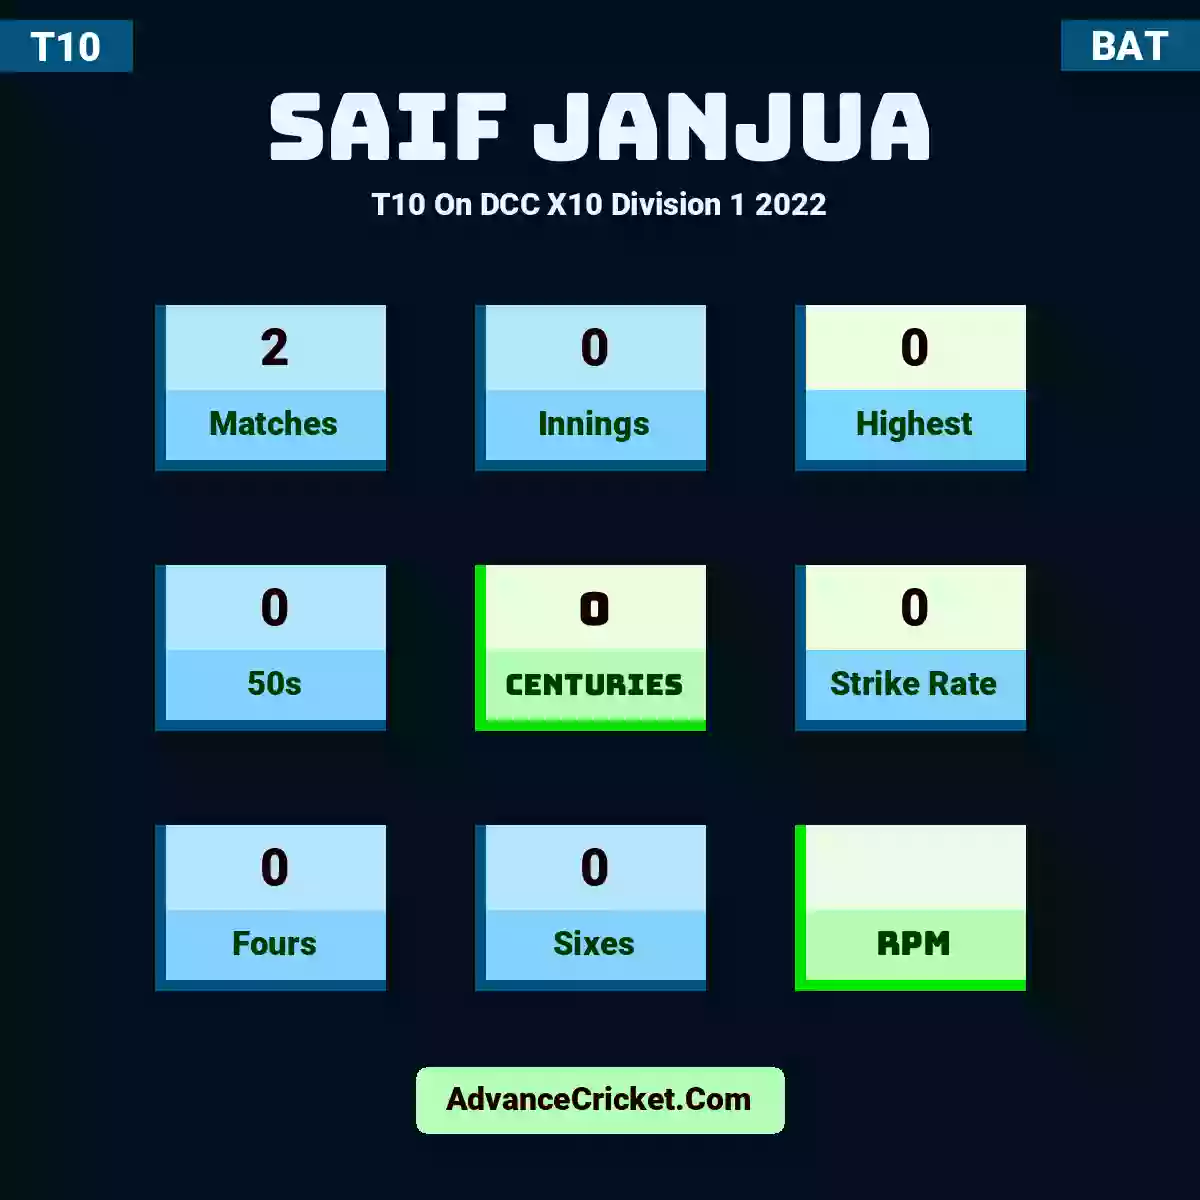 Saif Janjua T10  On DCC X10 Division 1 2022, Saif Janjua played 2 matches, scored 0 runs as highest, 0 half-centuries, and 0 centuries, with a strike rate of 0. S.Janjua hit 0 fours and 0 sixes.